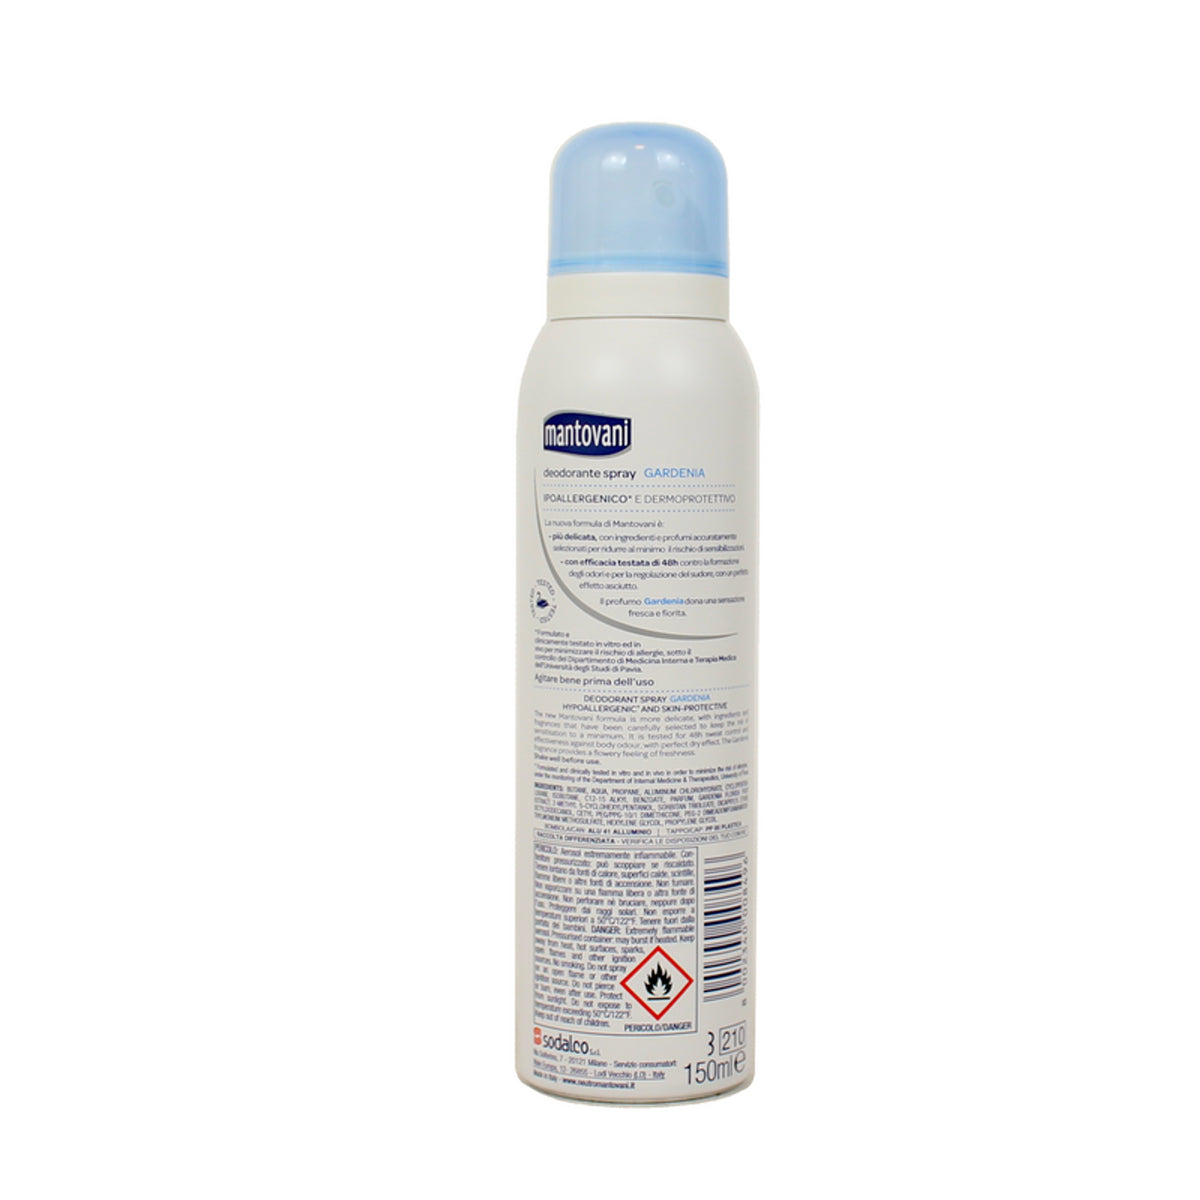 Mantovani dezodorant sprej Gardiaia 150 ml